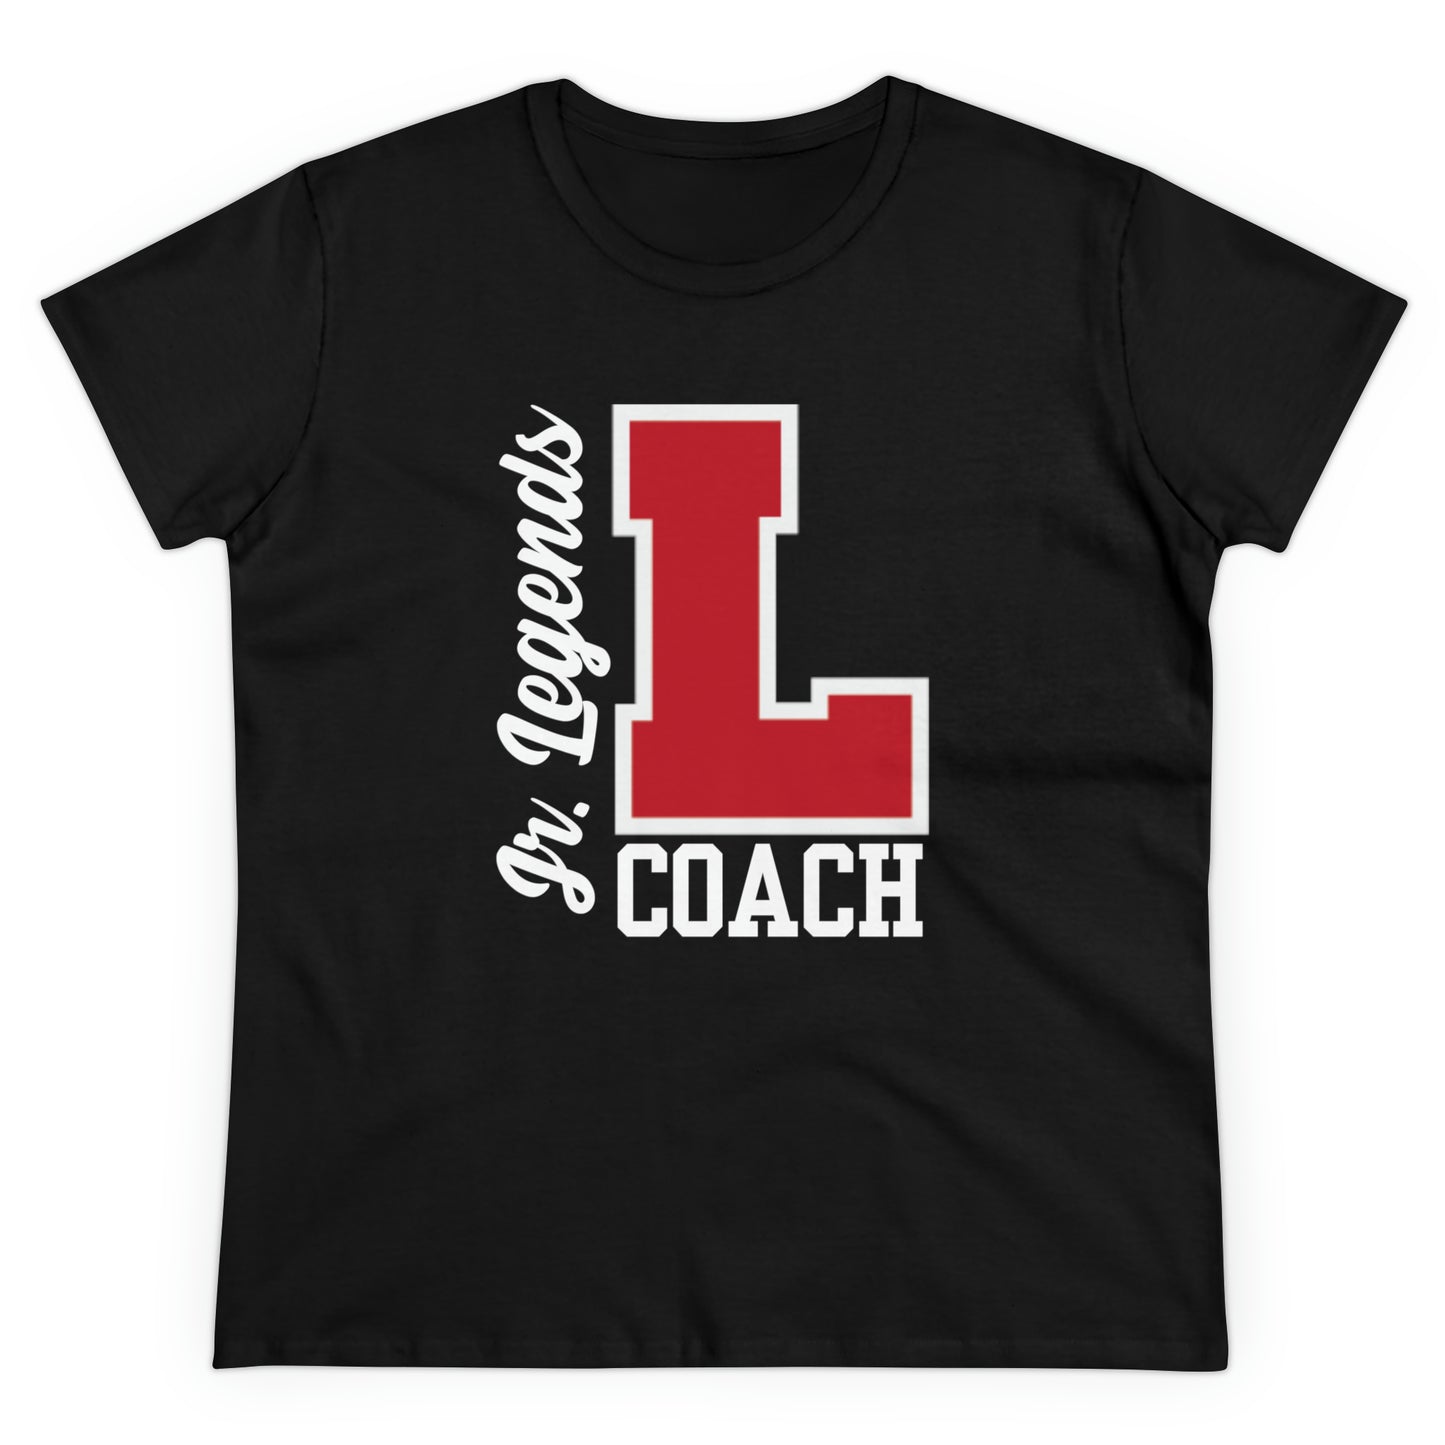 Lanc. Cheer Coach Women's Cotton Tee